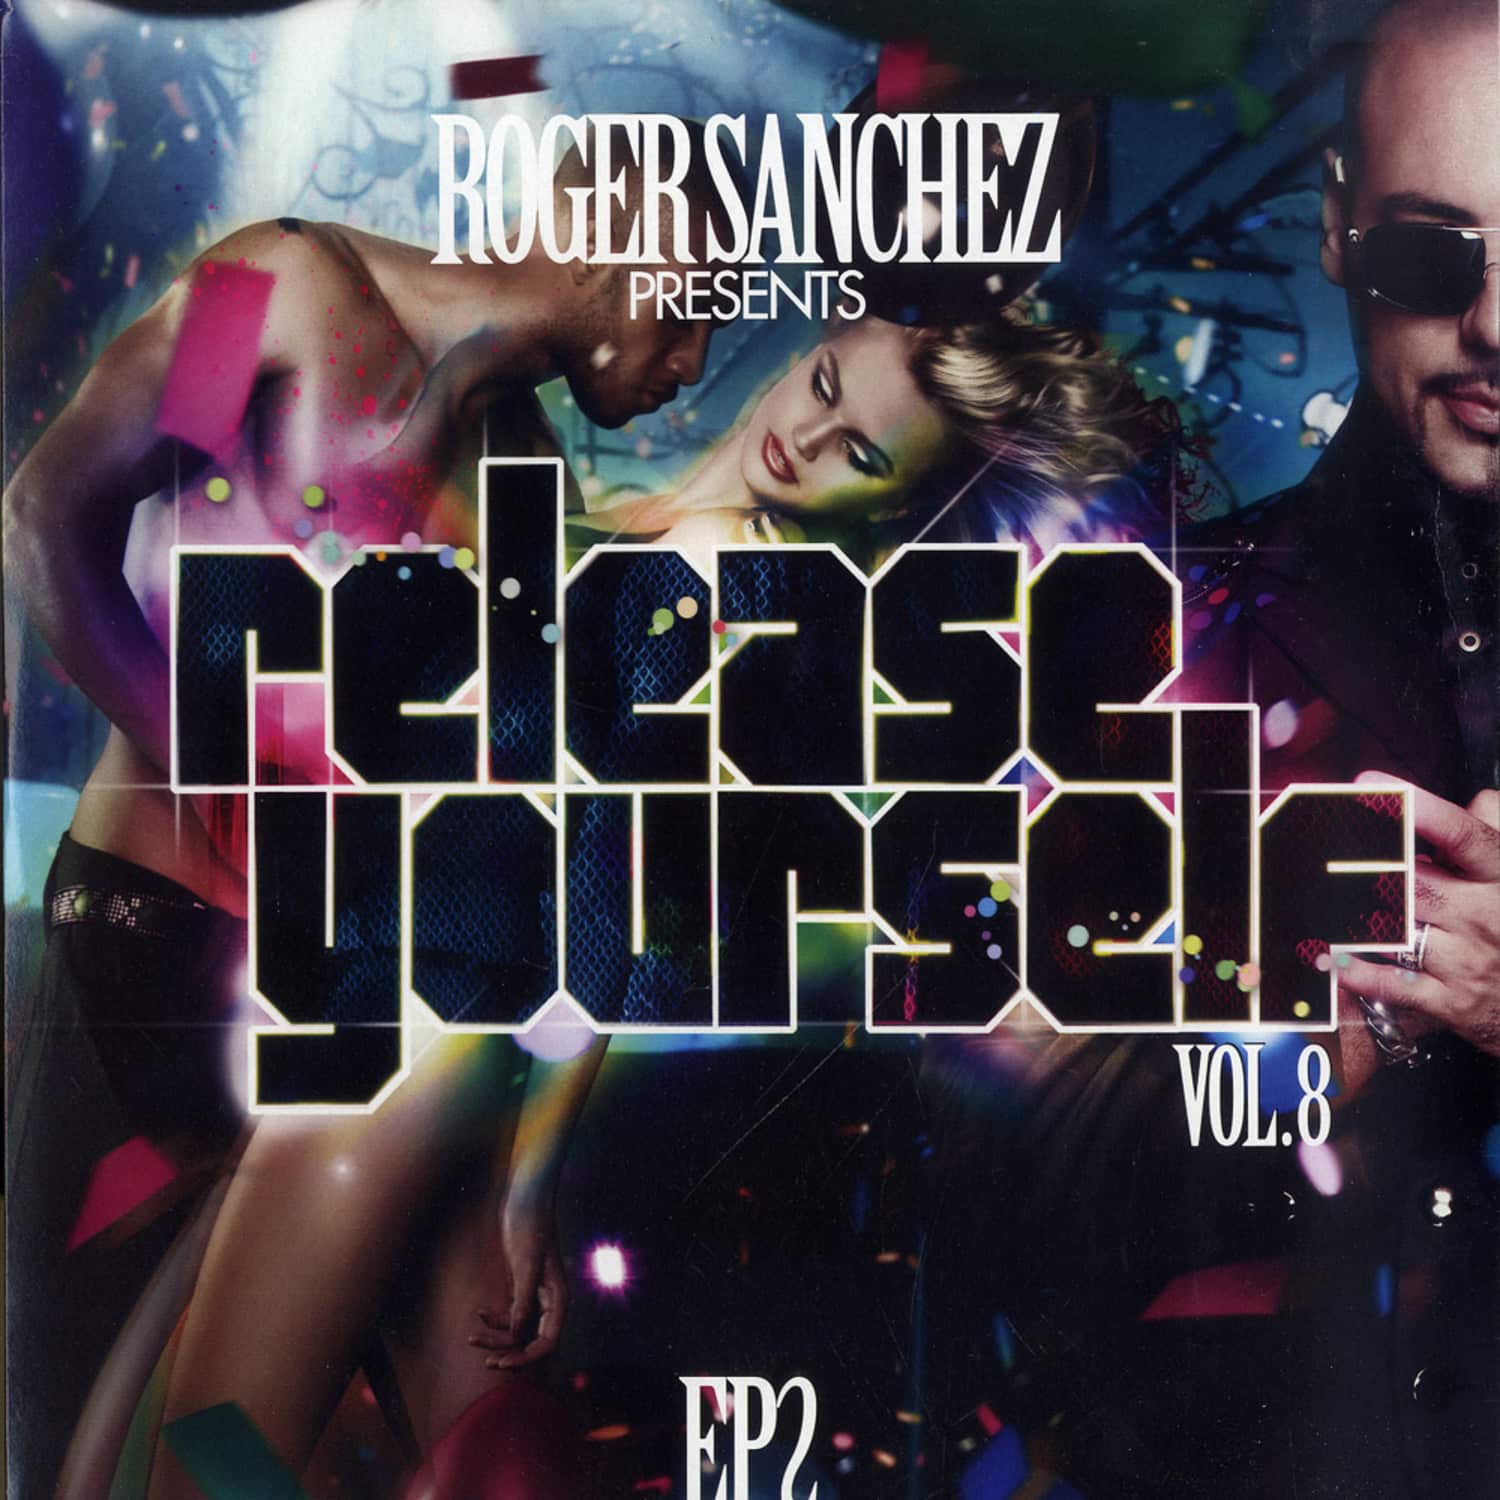 Roger Sanchez - RELEASE YOURSELF 8 EP 2